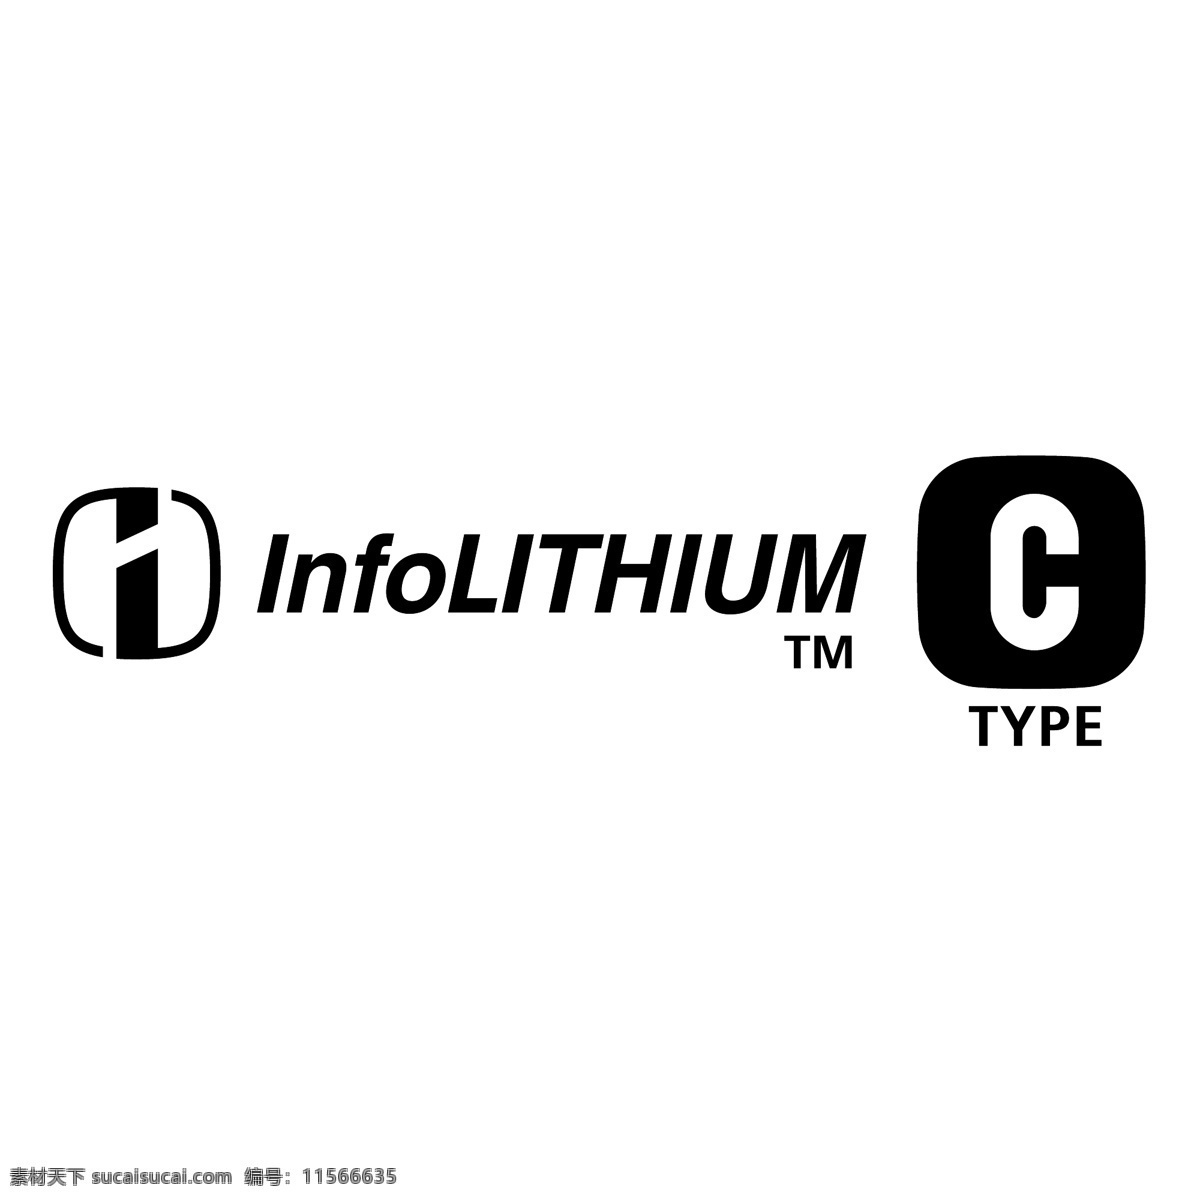 自由 infolithium c标志 标识 c 白色